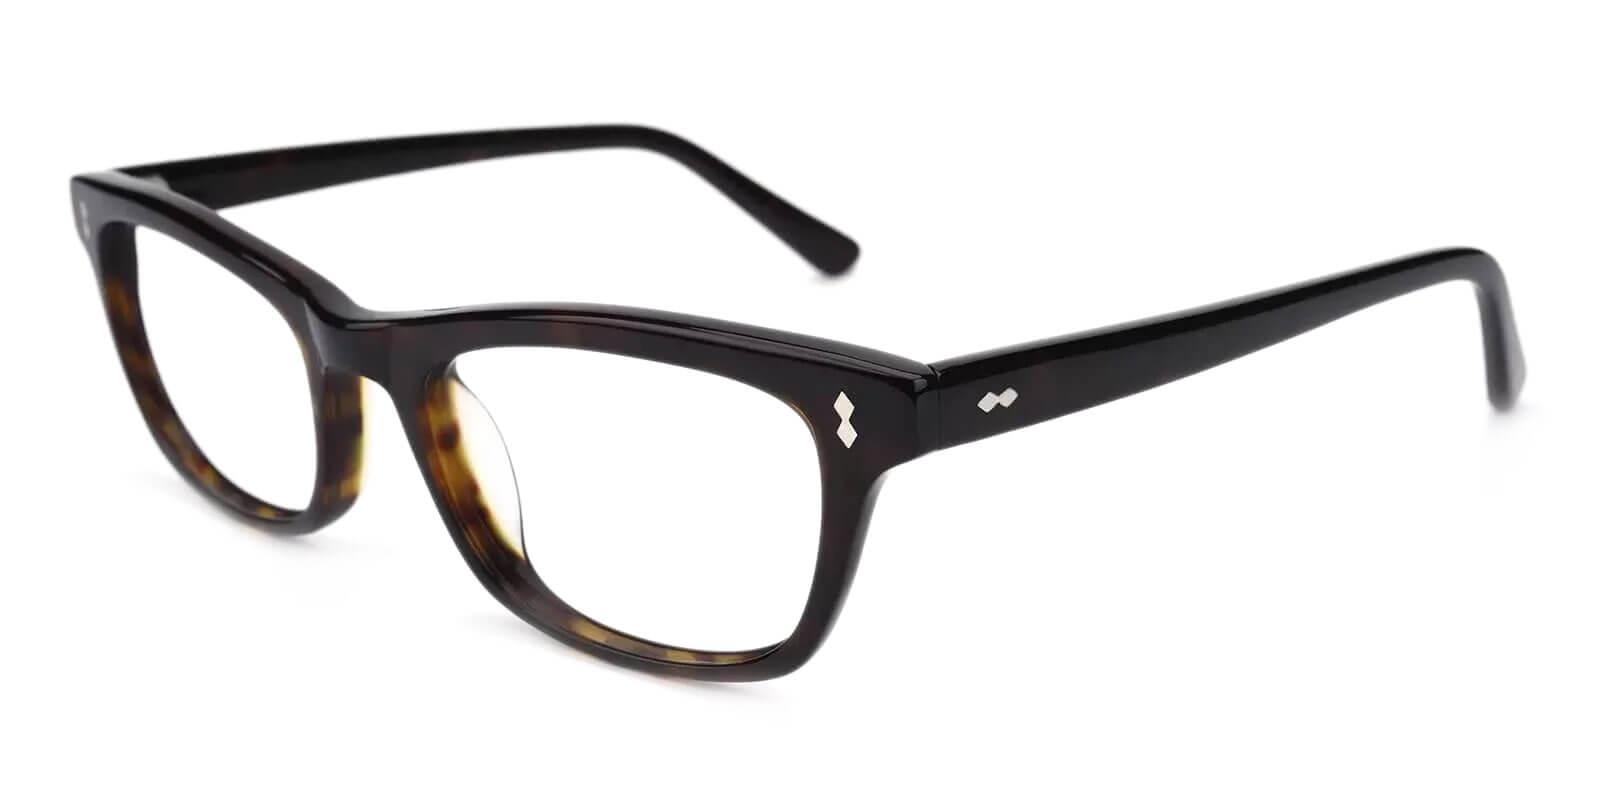 Leaf Pattern Acetate Eyeglasses , UniversalBridgeFit Frames from ABBE Glasses